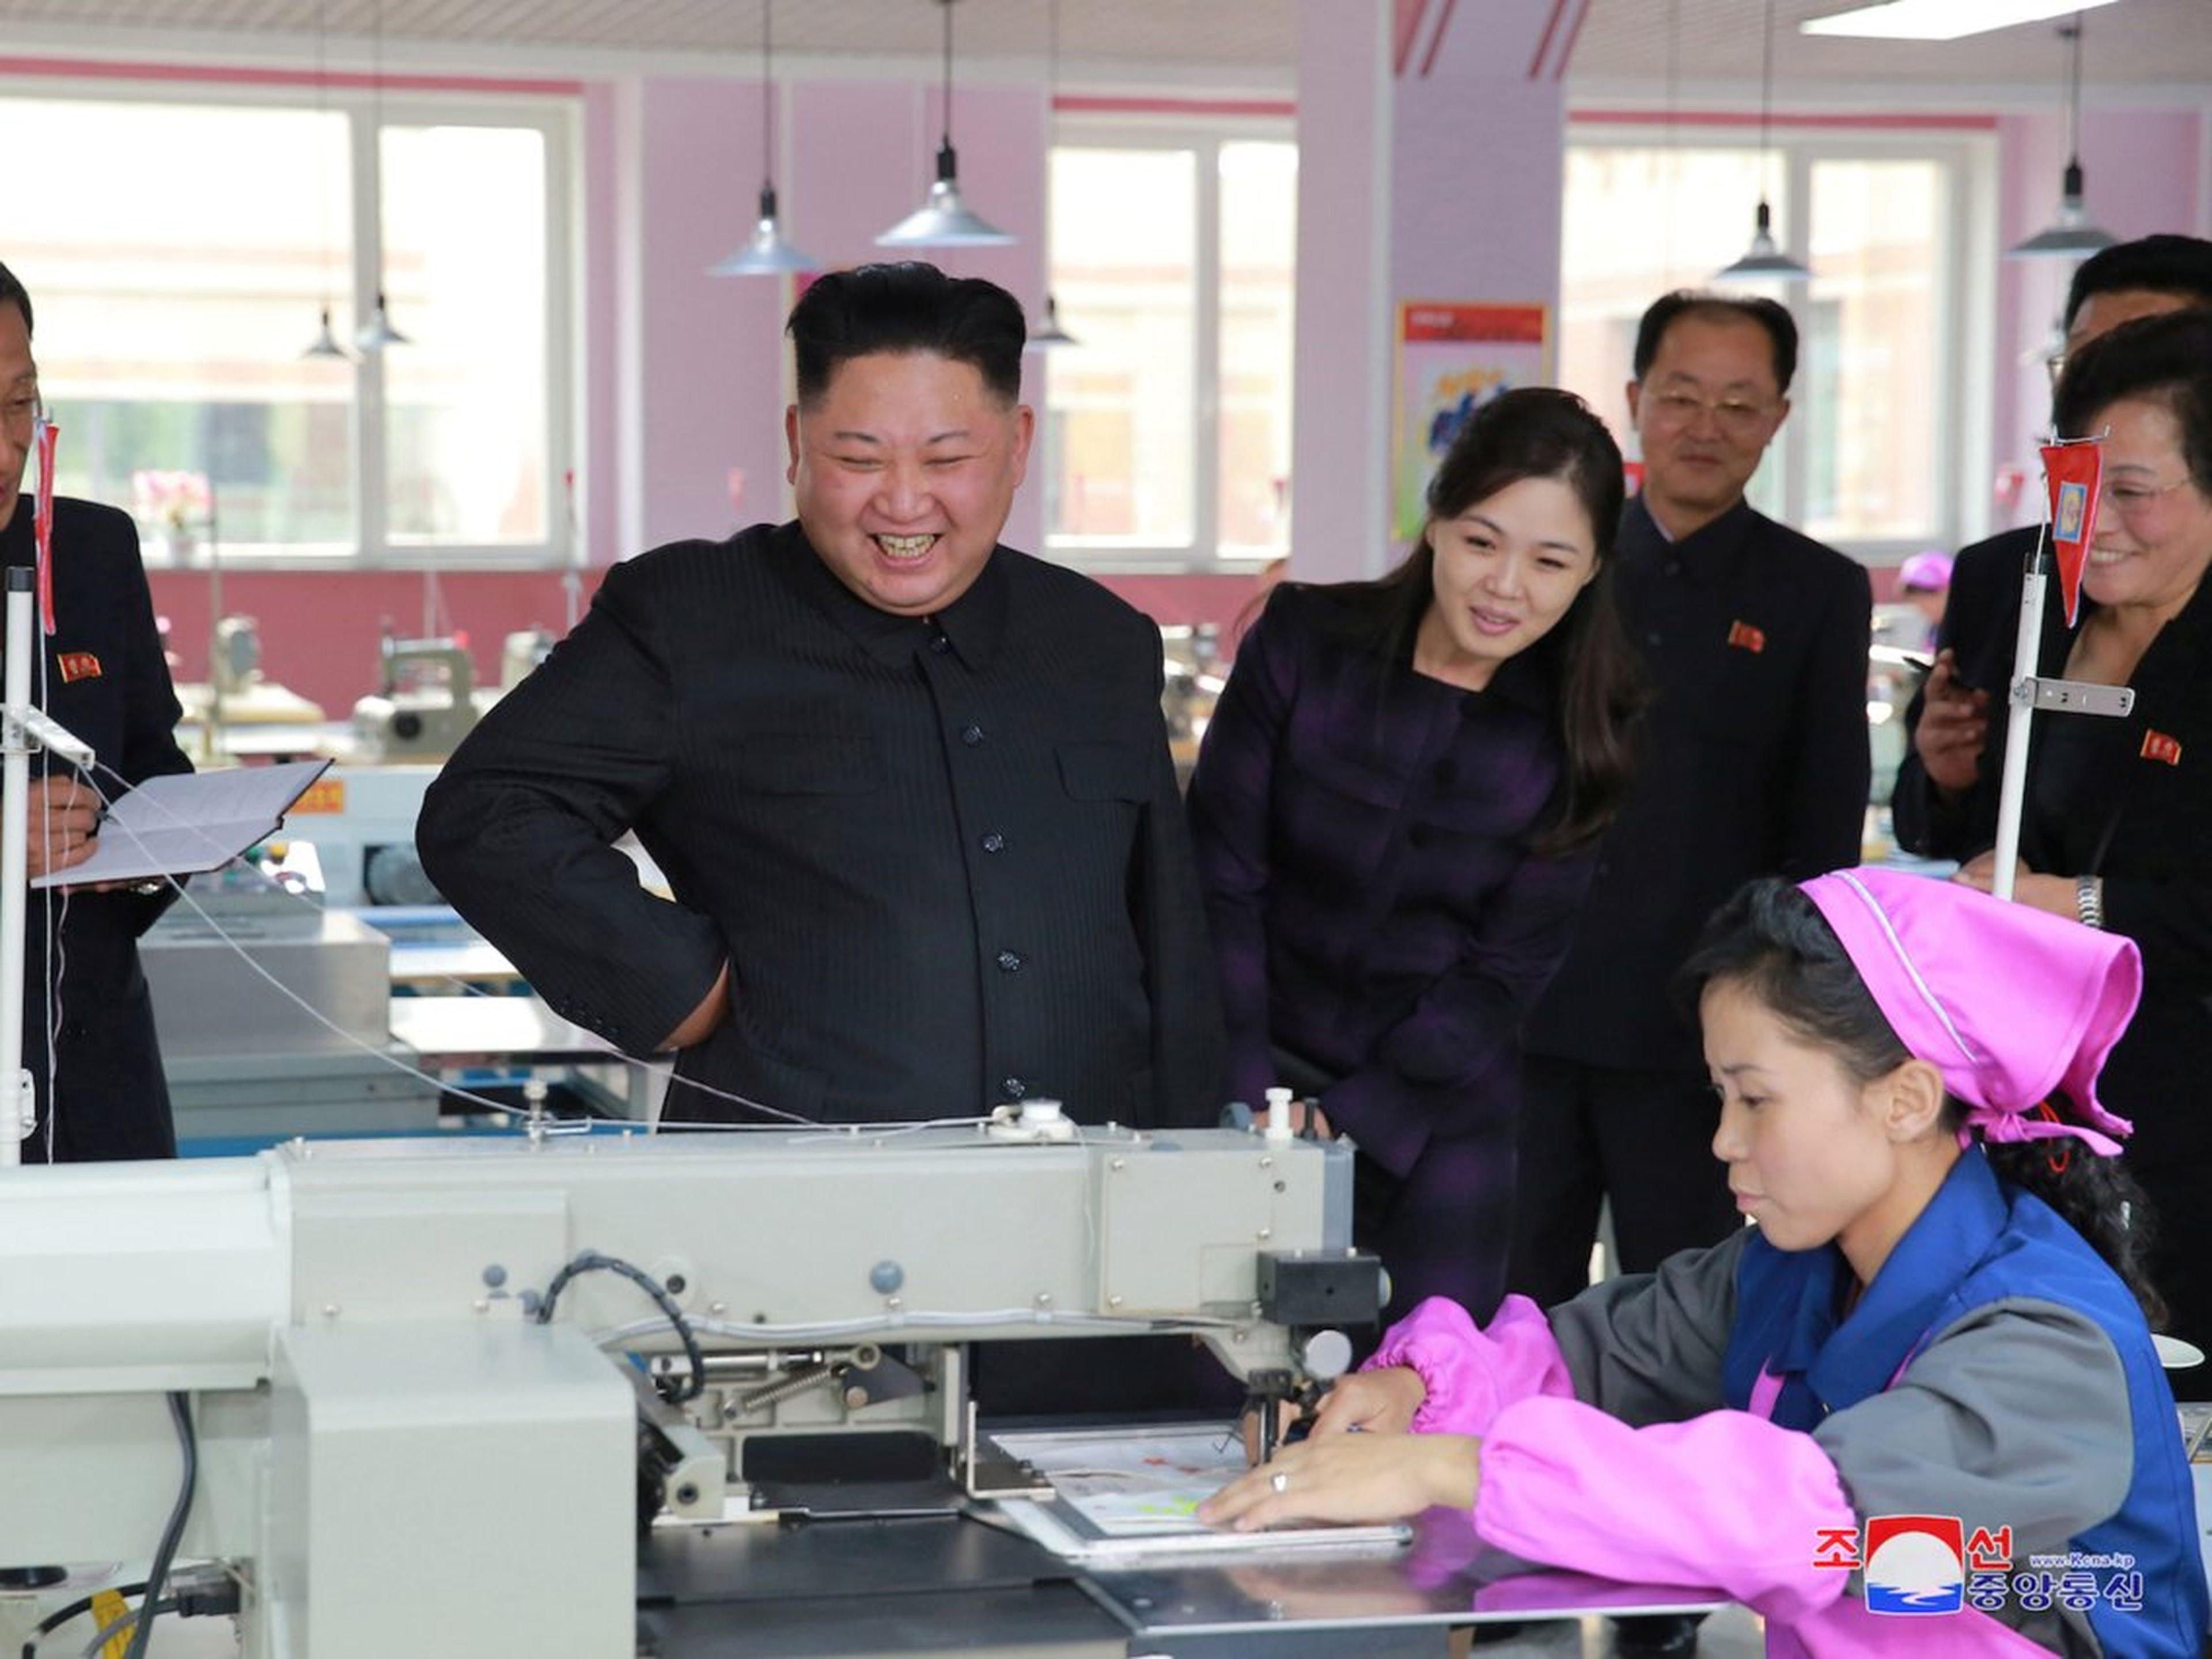 Kim Jong-Un visitando Ryuwon, fábrica de zapatillas de deporte en Pyongyang.